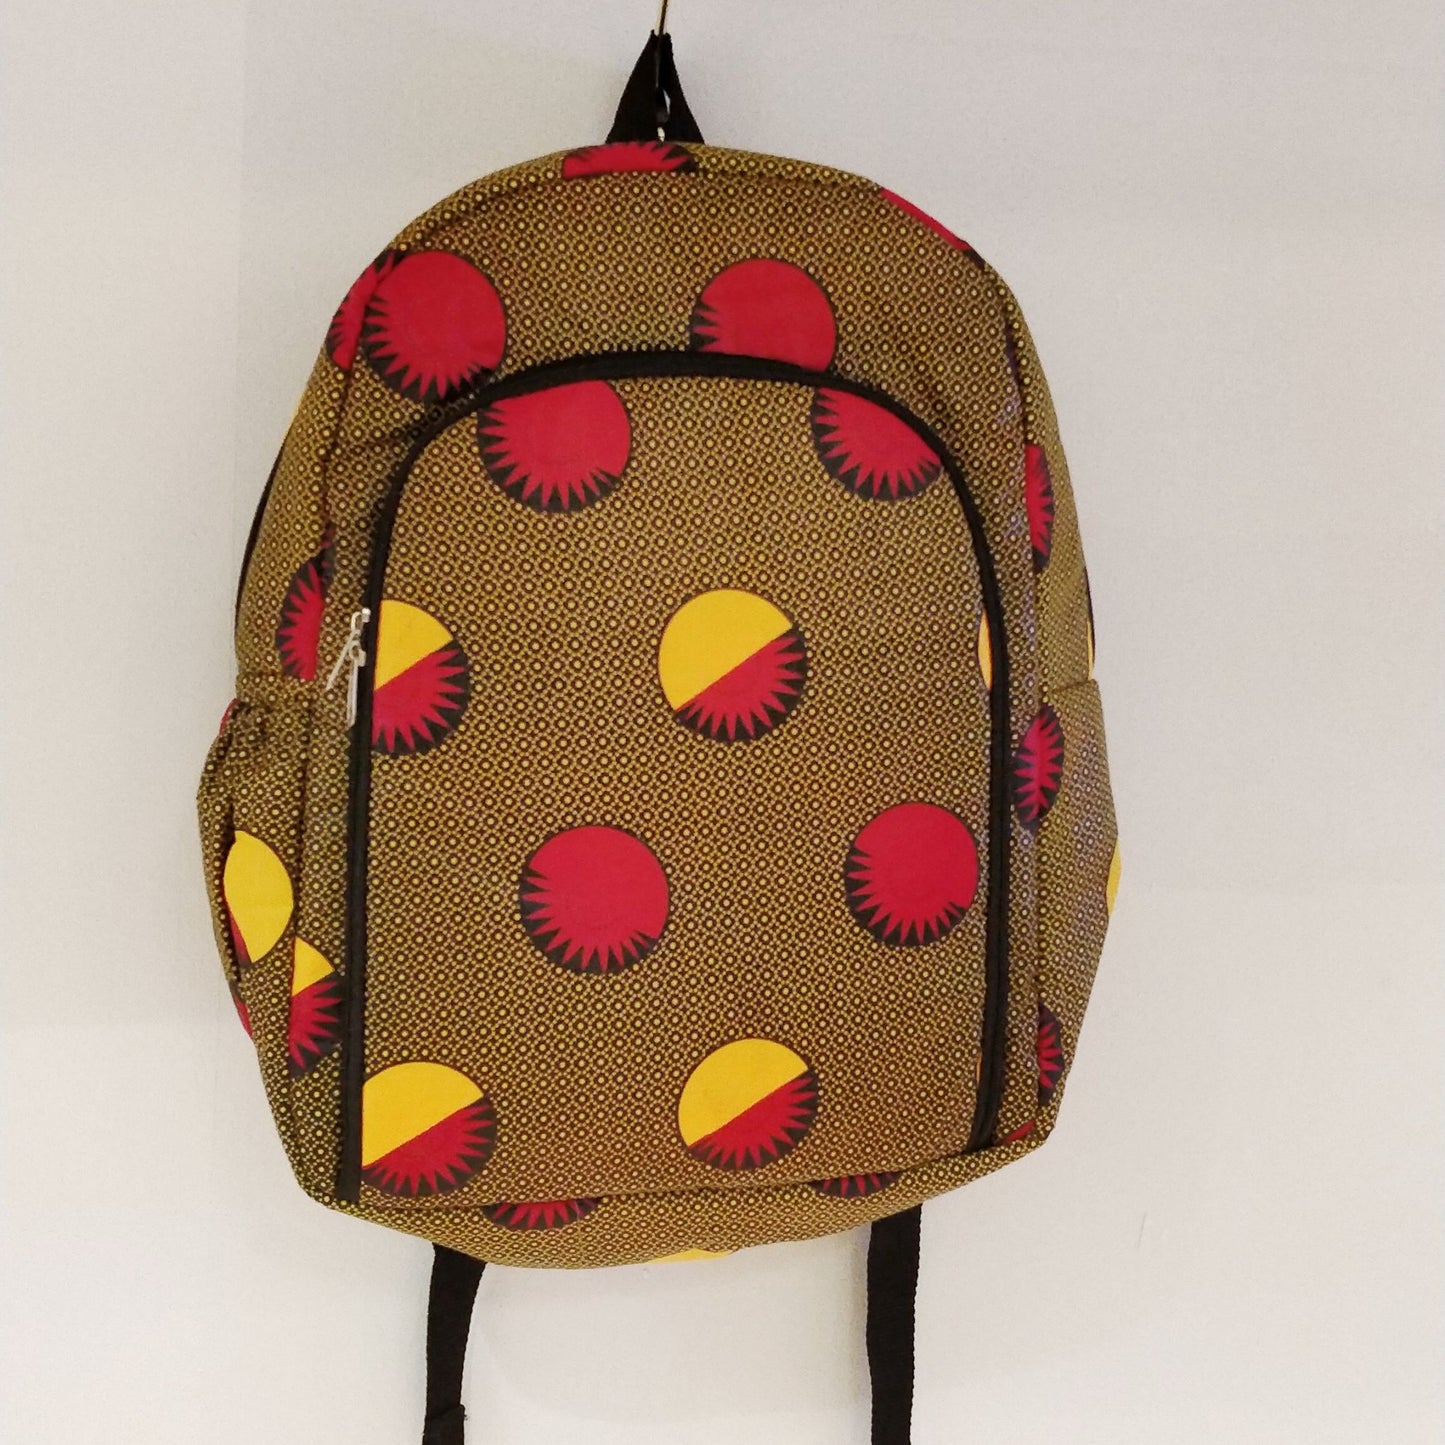 Handmade Colourful Backpack Empowering Women in Uganda